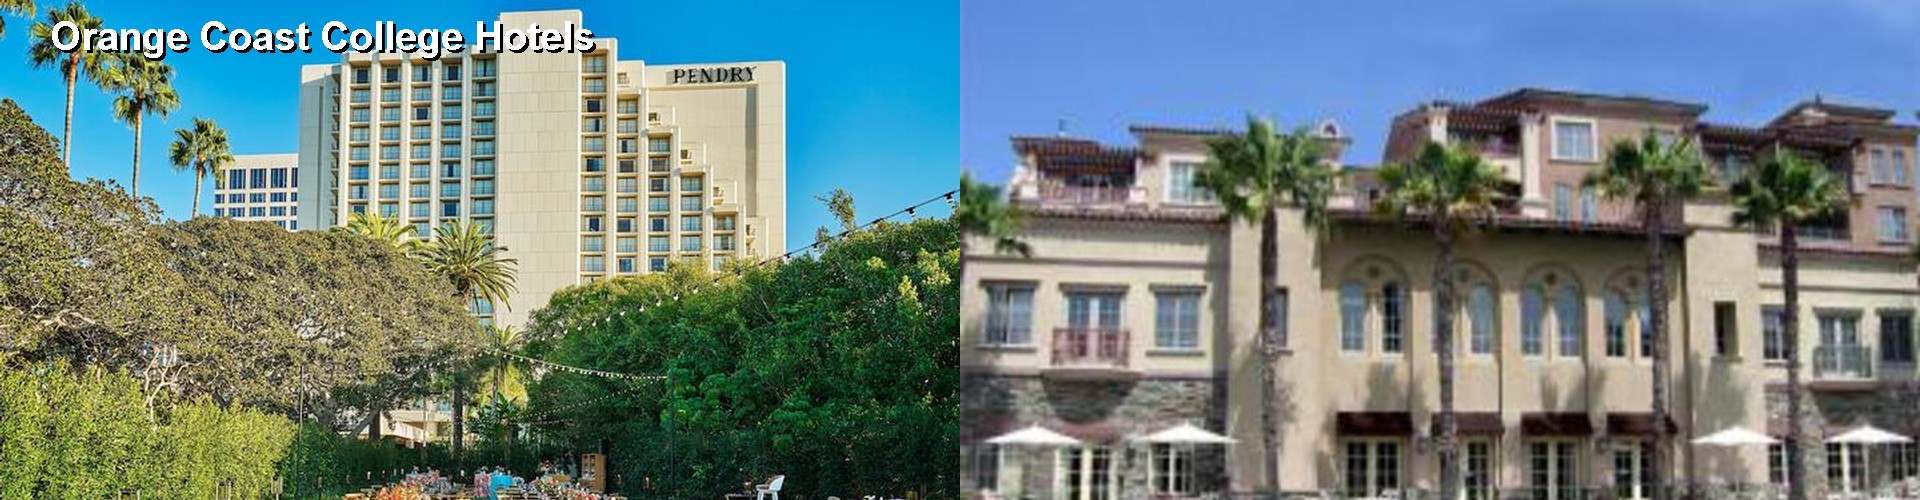 4 Best Hotels near Orange Coast College